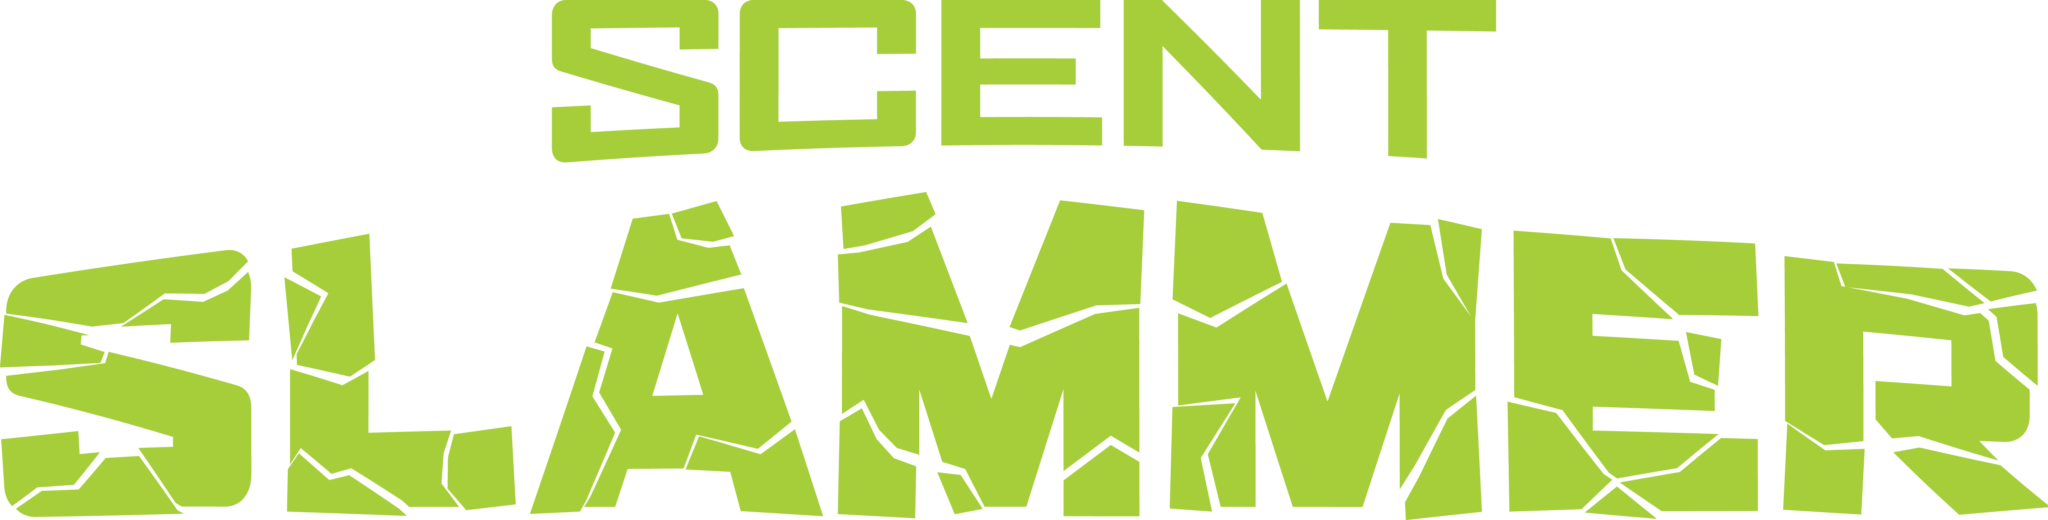 HME Logo - Scent Slammer | HME Products